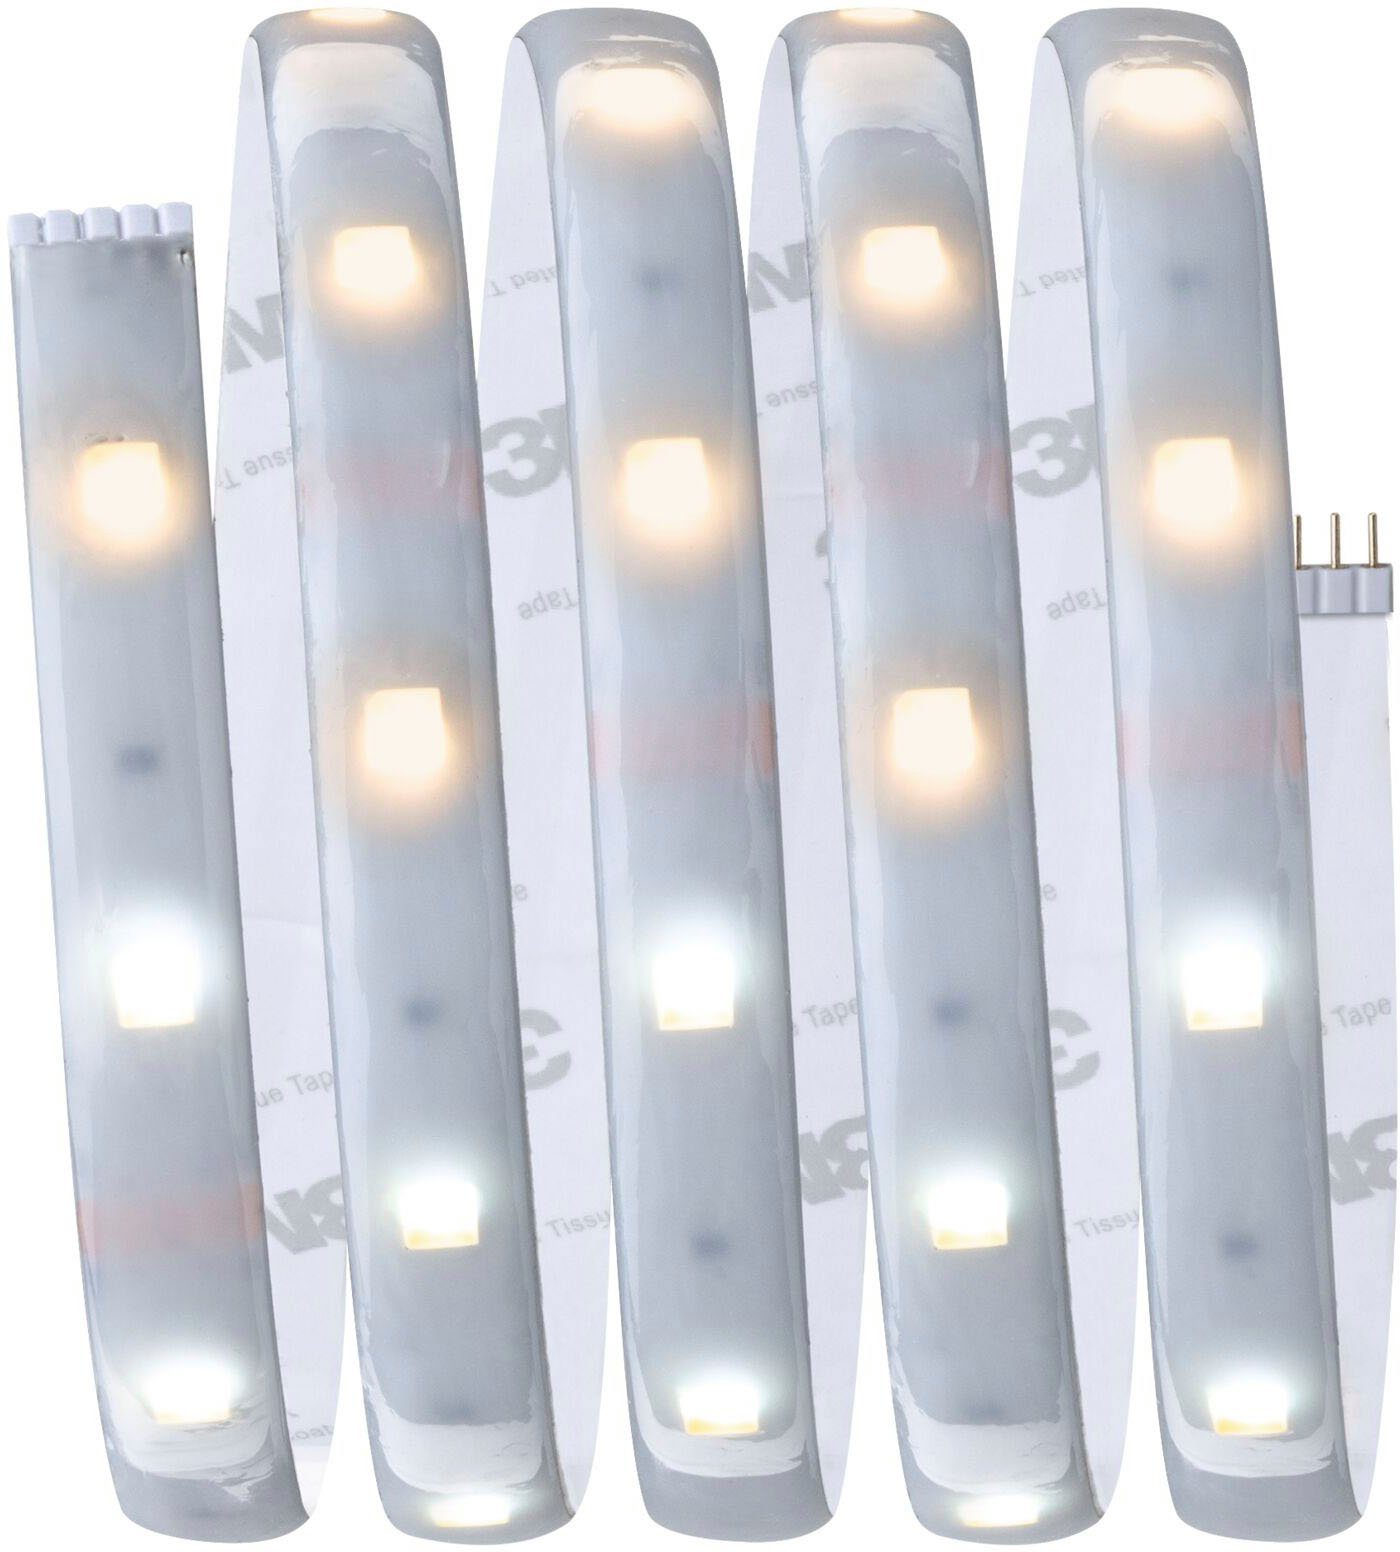 Tunable Home LED-Streifen MaxLED 405lm, IP44 Paulmann beschichtet Smart 405l 250 1-flammig, 1,5m, Basisset 6W Zigbee White,